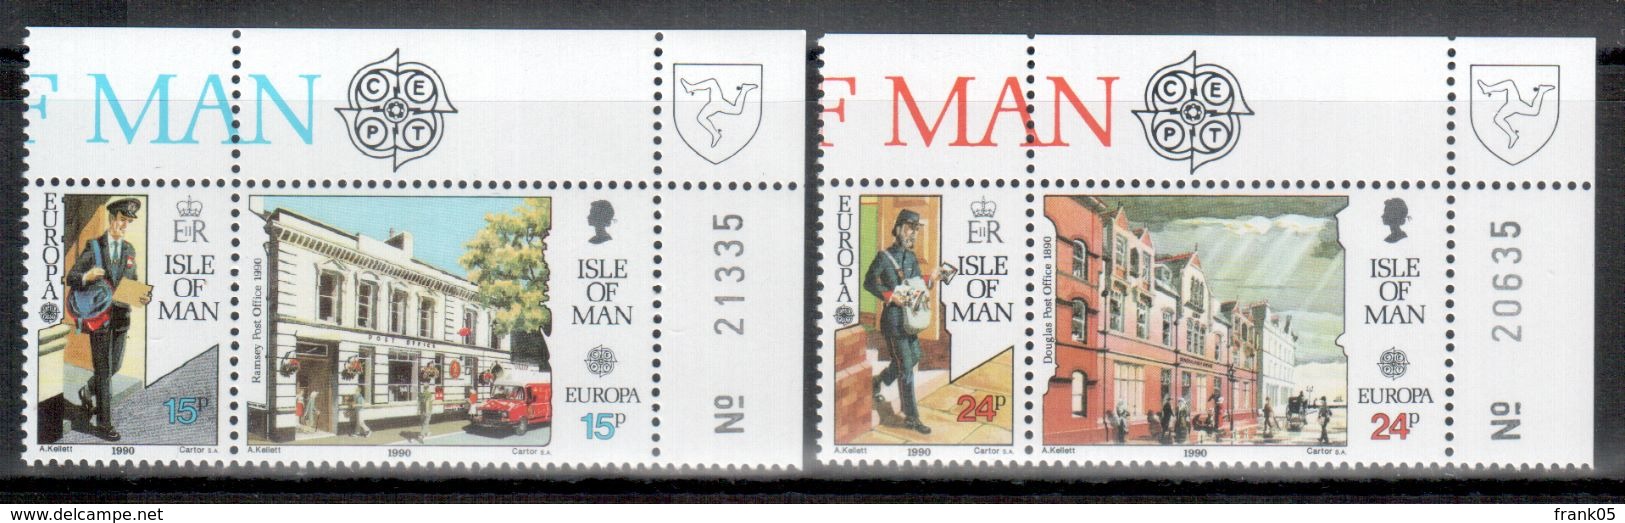 Insel Man / Isle Of Man / Ile De Man 1990 Satz/set EUROPA ** - 1990